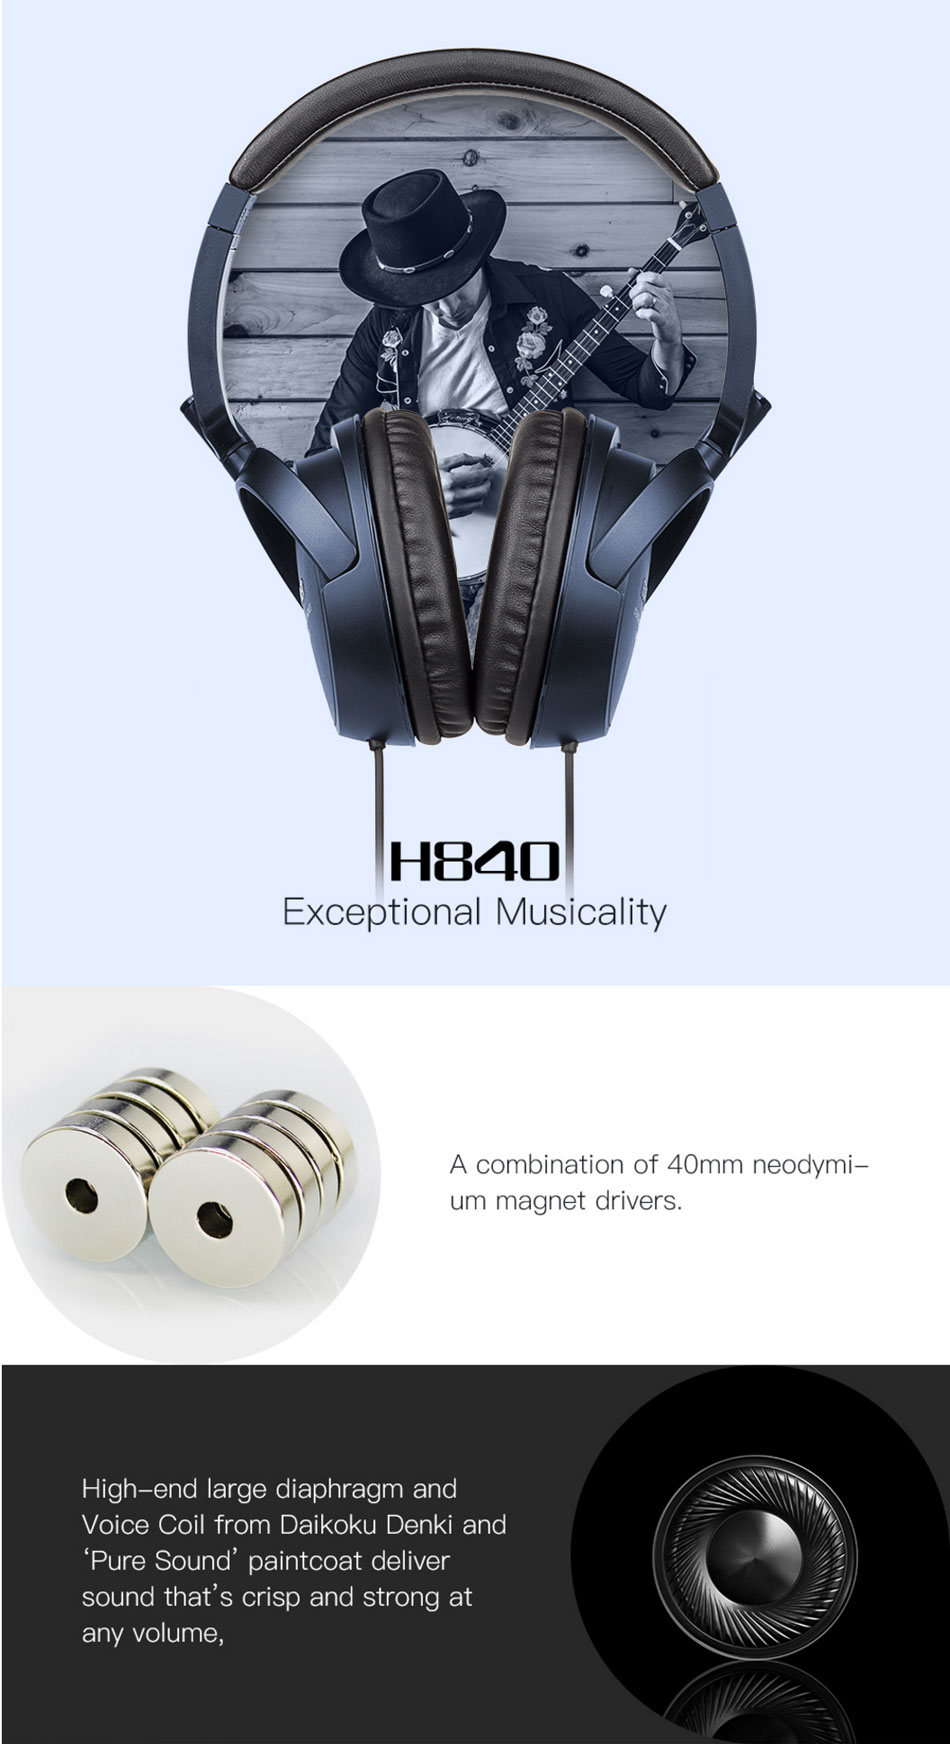 Edifier H840 Noise Cancelling Powerful Sound Ergonomic Ear Pads HIFI Headphone Headset 3.5mm AUX 11